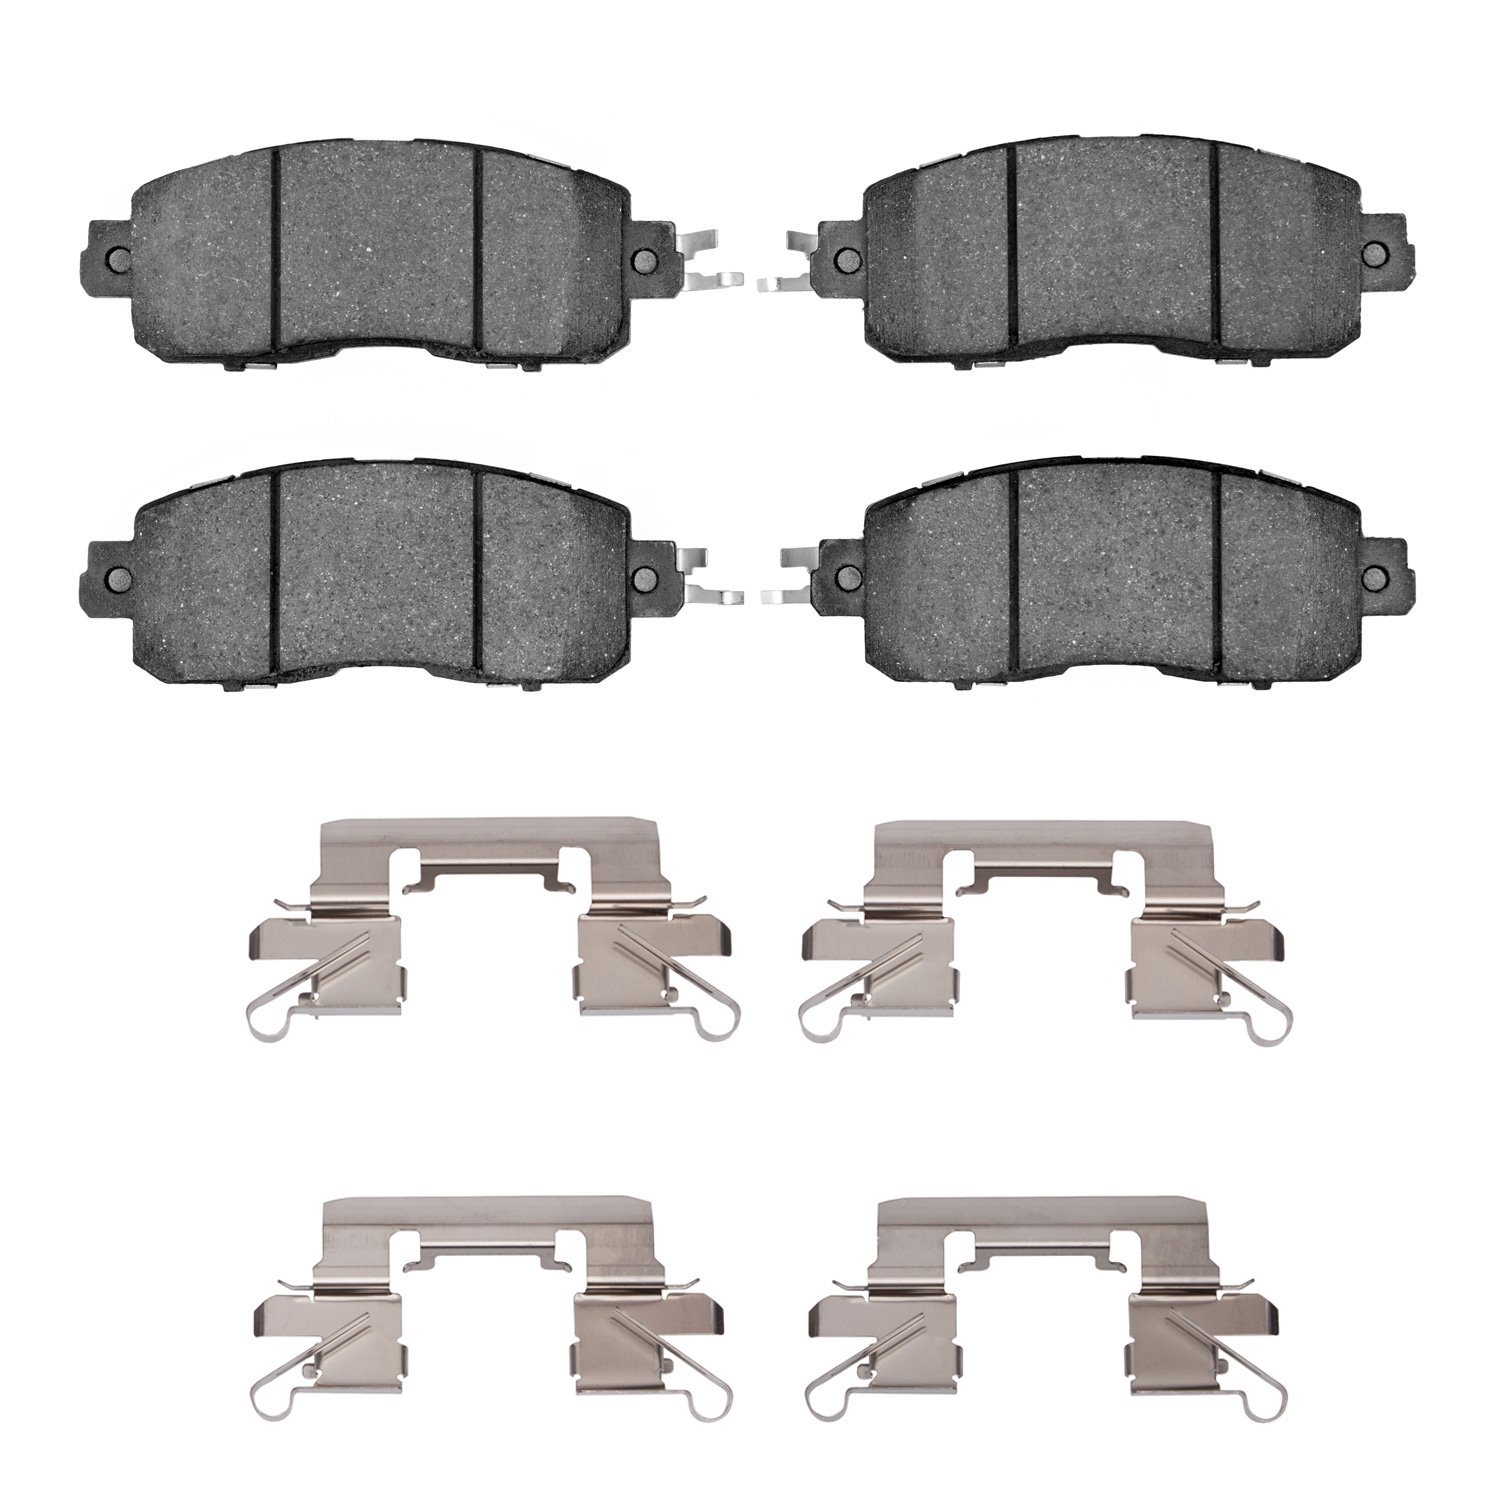 1310-1650-01 3000-Series Ceramic Brake Pads & Hardware Kit, Fits Select Infiniti/Nissan, Position: Front